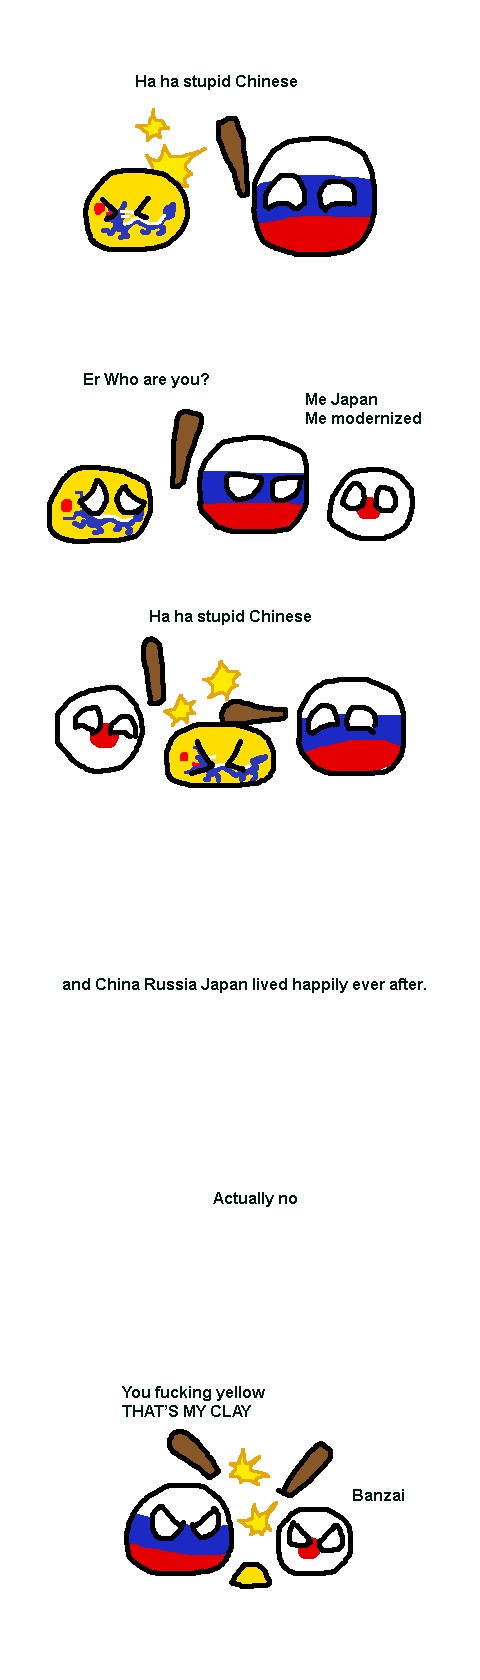 Japan/Russia war(1905, Japanese victory) - meme